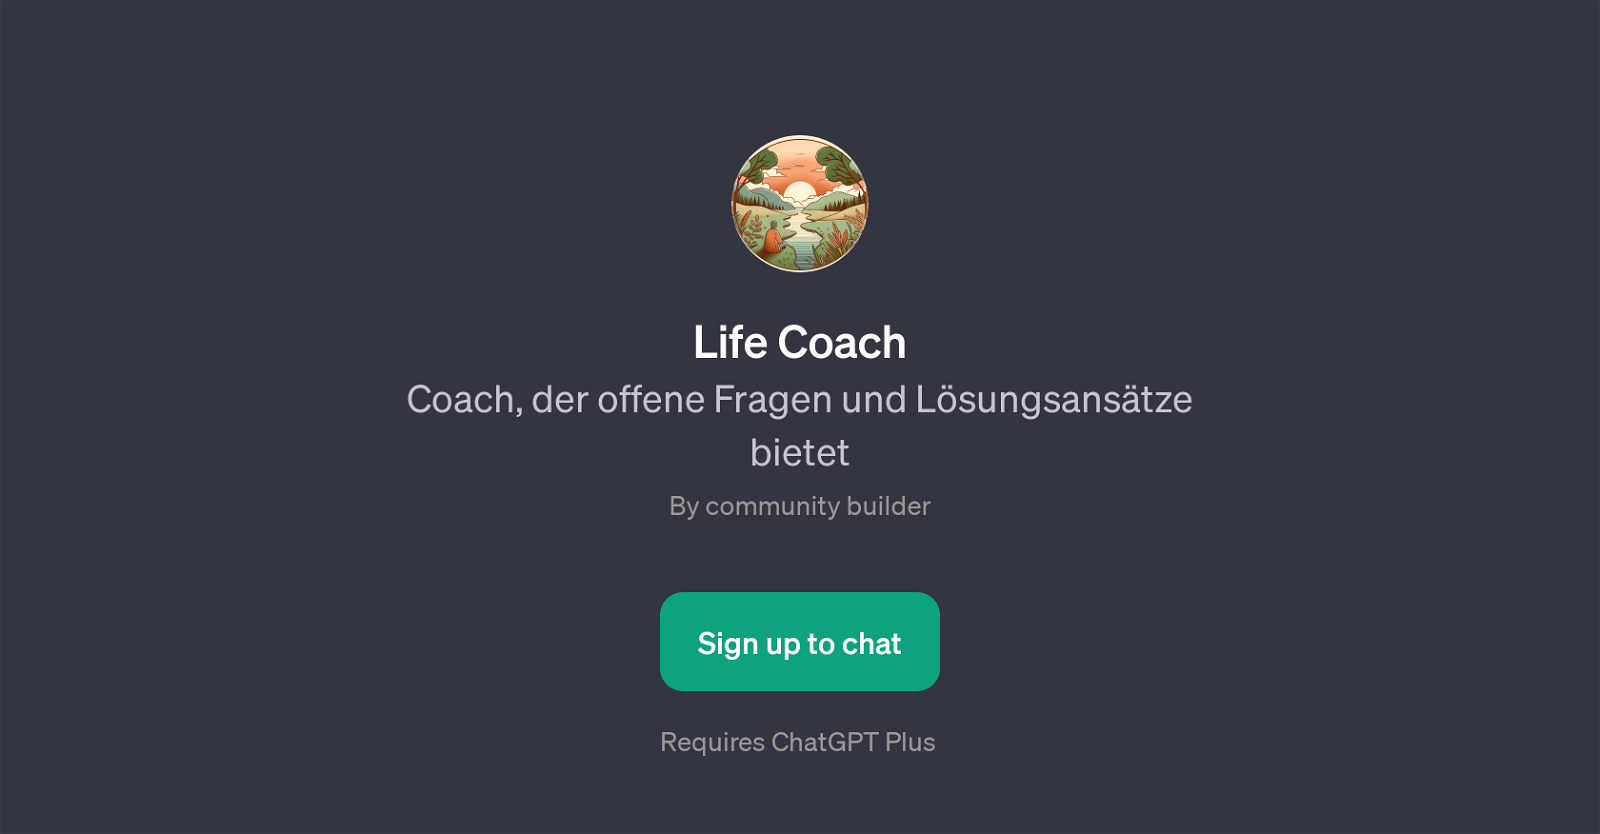 Life Coach website